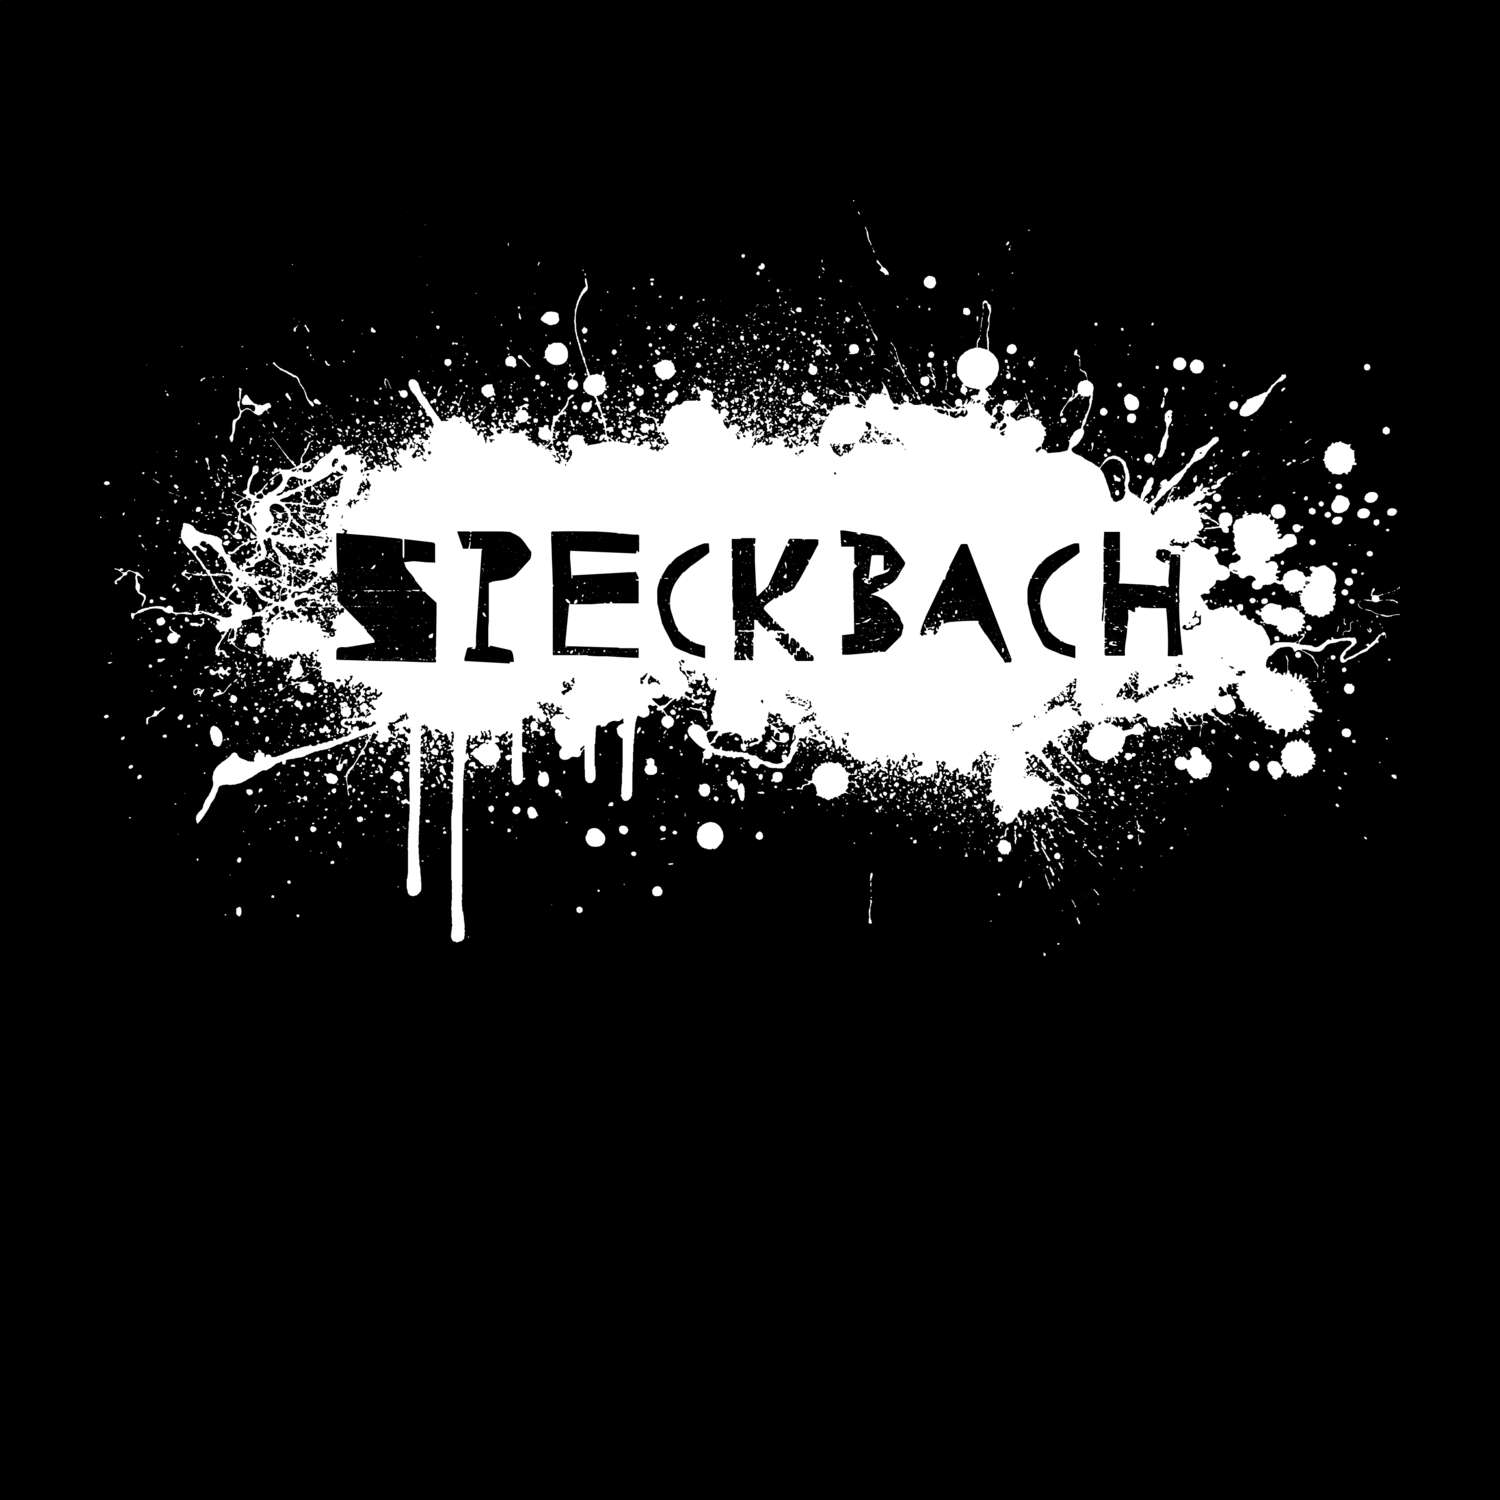 Speckbach T-Shirt »Paint Splash Punk«